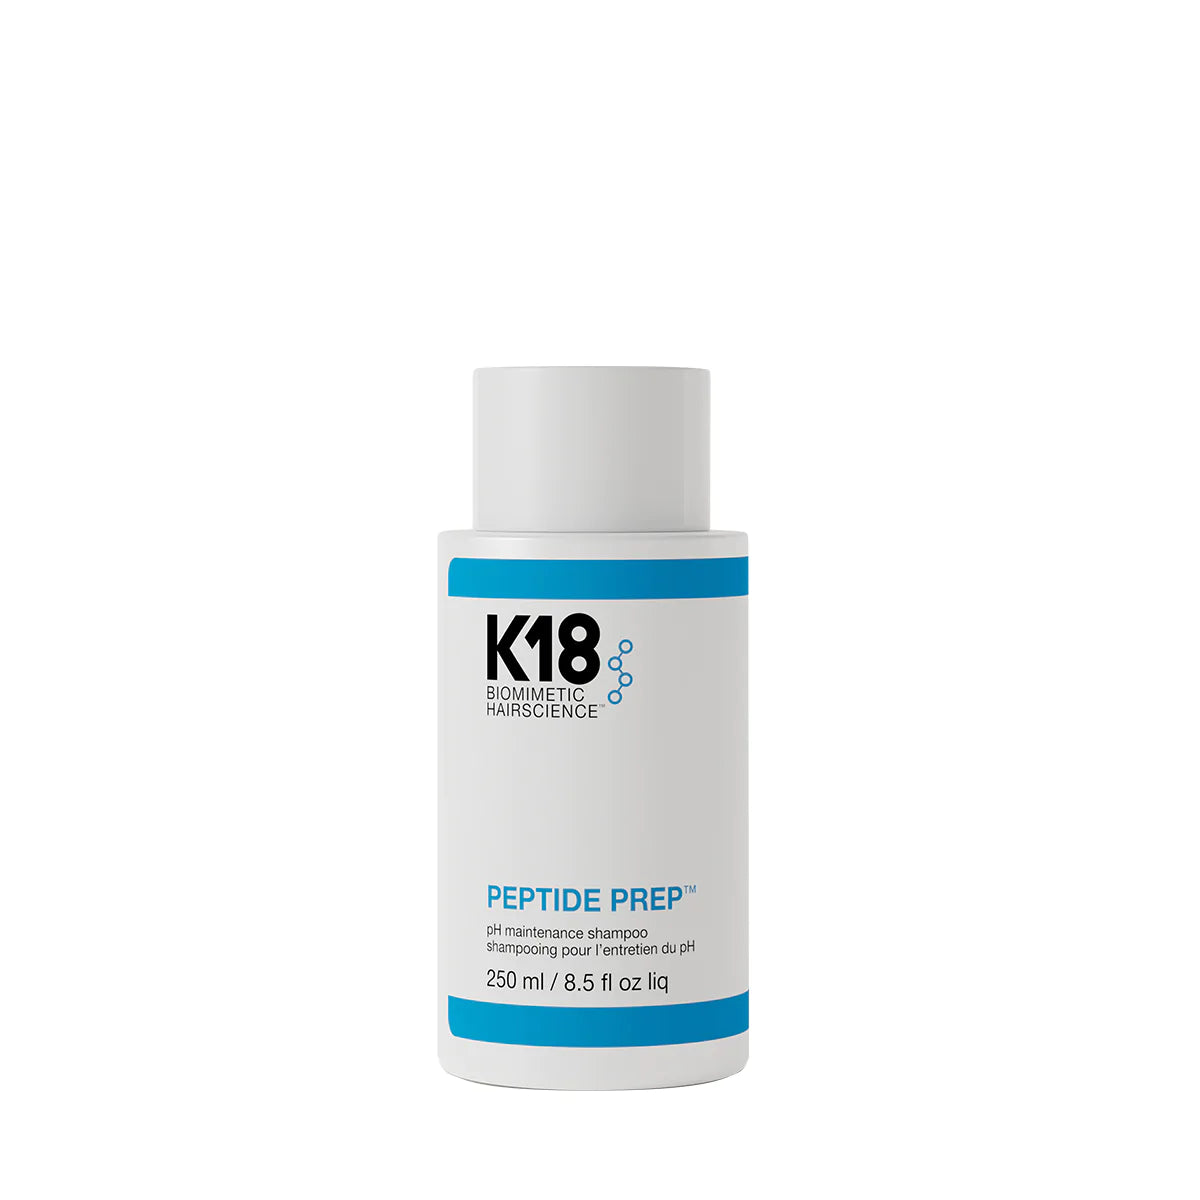 K18 Damage Shield protective shampoo ja 15ml maski